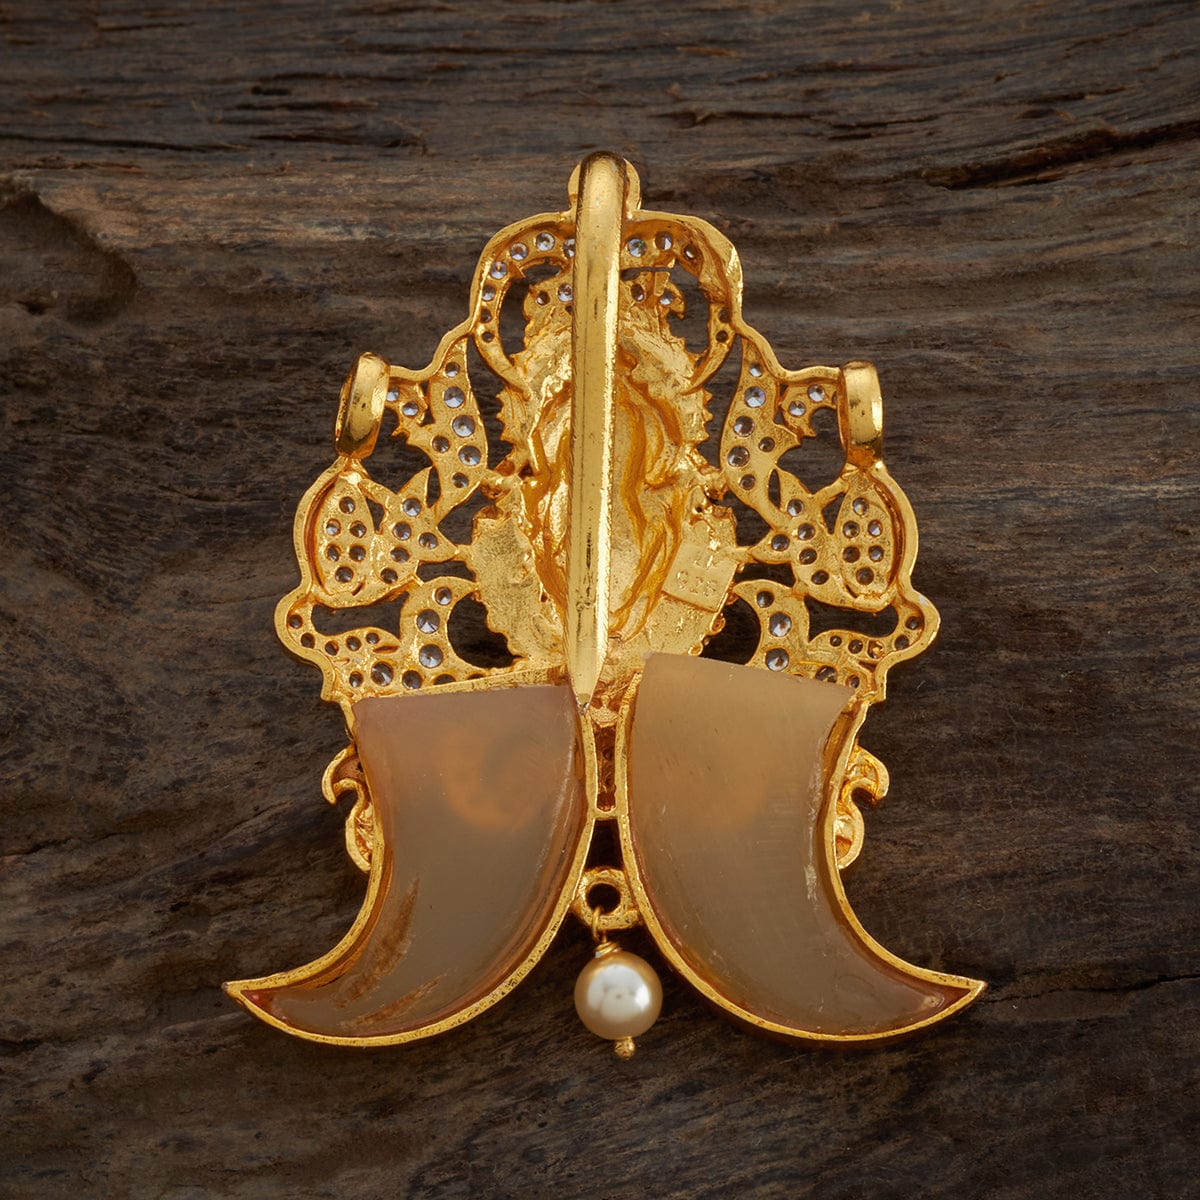 Buy Tiger Nail Pendant in 22 Karat Gold from Totaram Jewelers USA